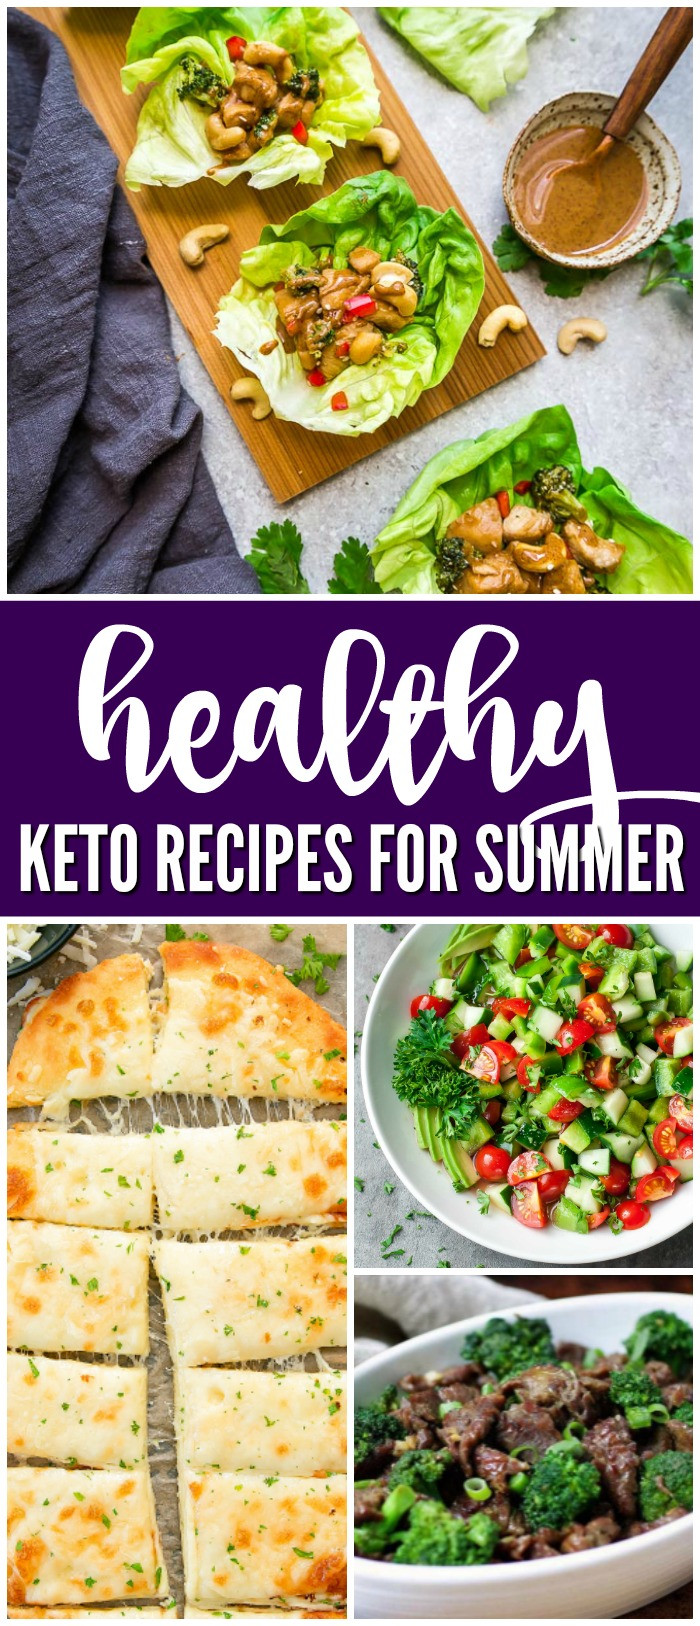 Healthy Keto Dinner Recipes For Family
 Healthy Keto Recipes for Summer